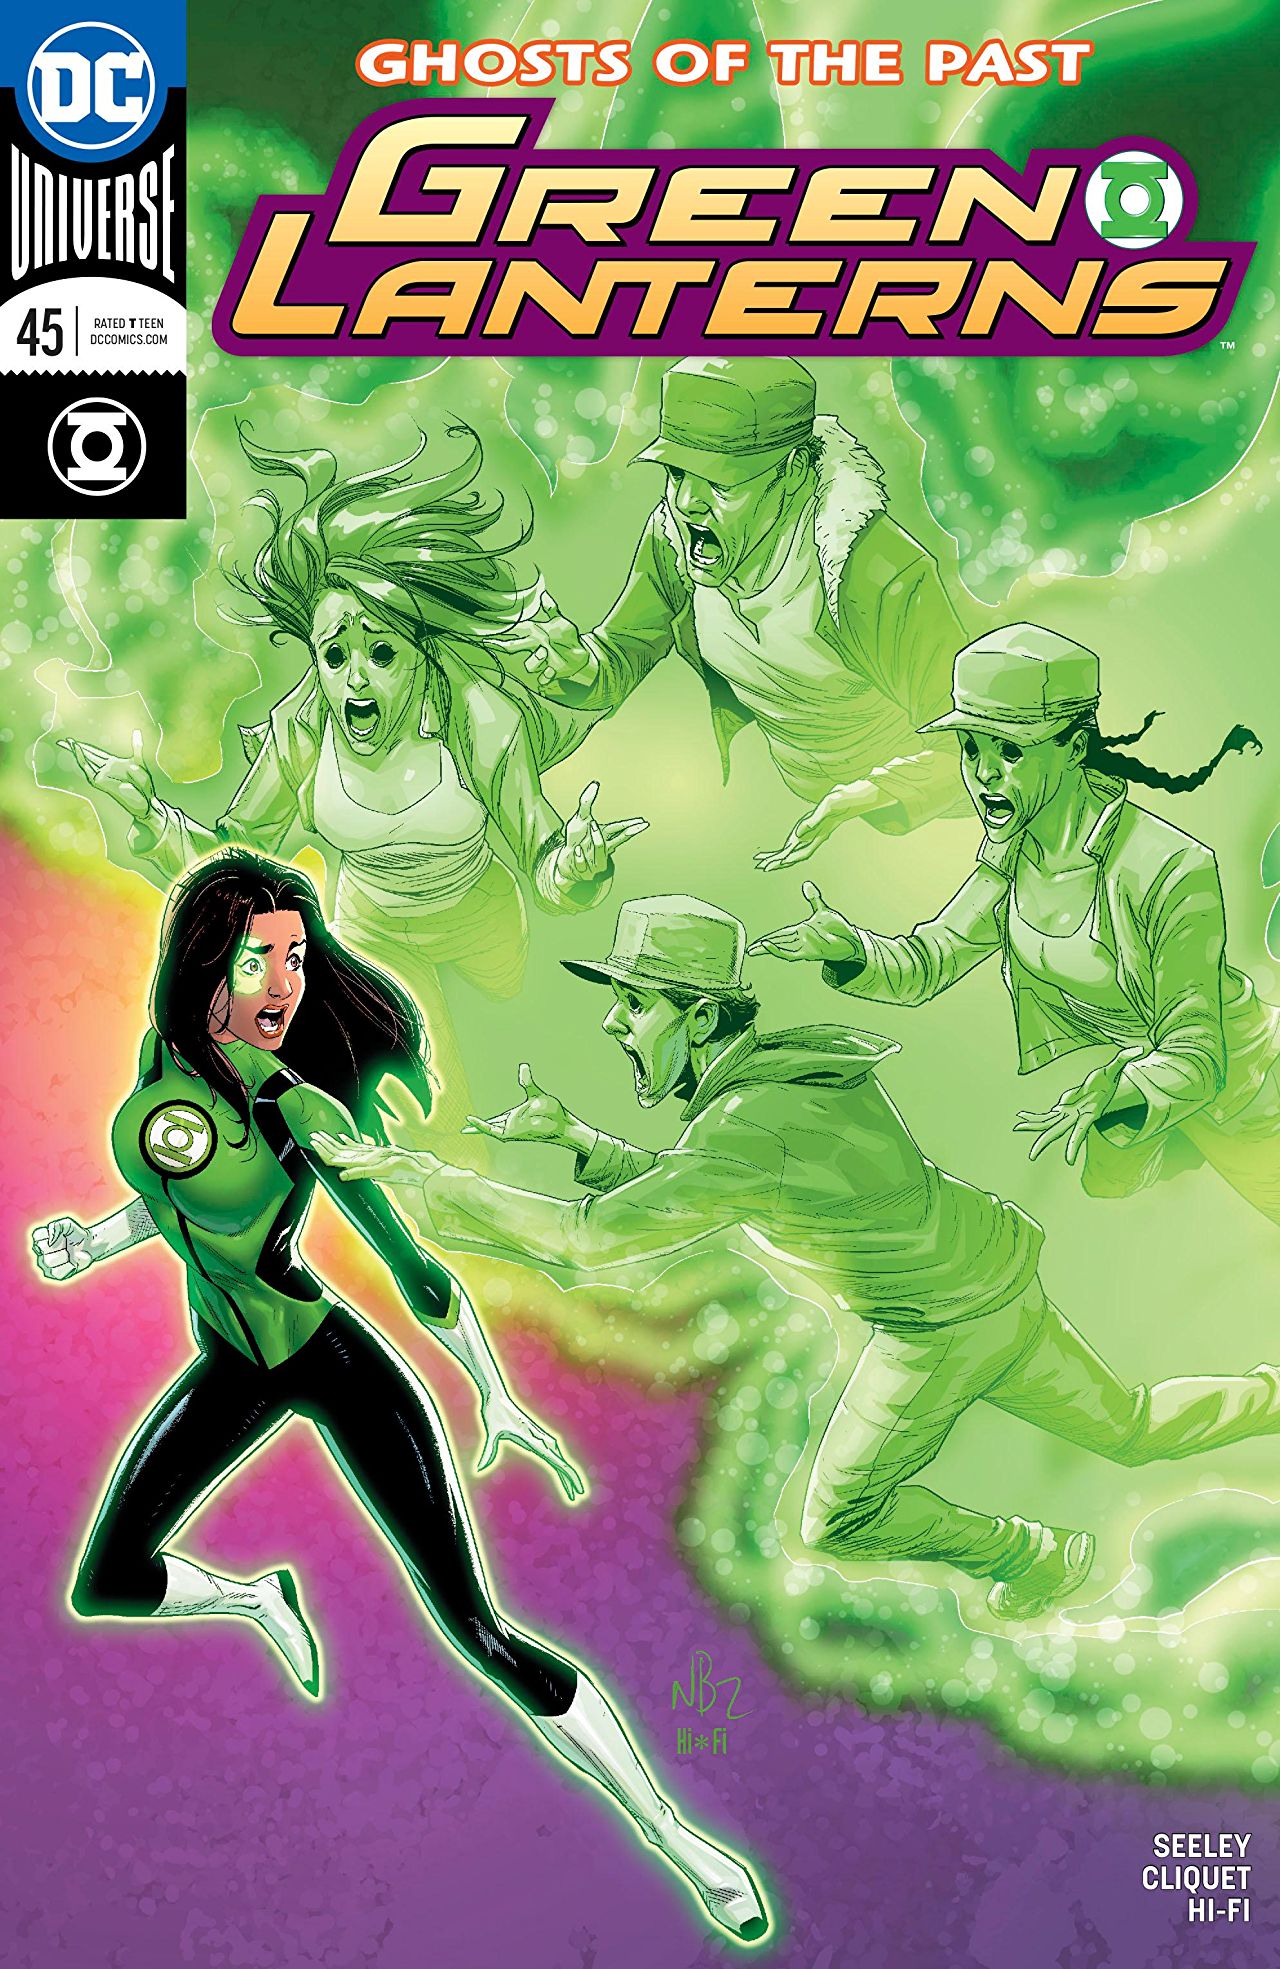 Green Lanterns #45 review: Adding depth to both villain and hero